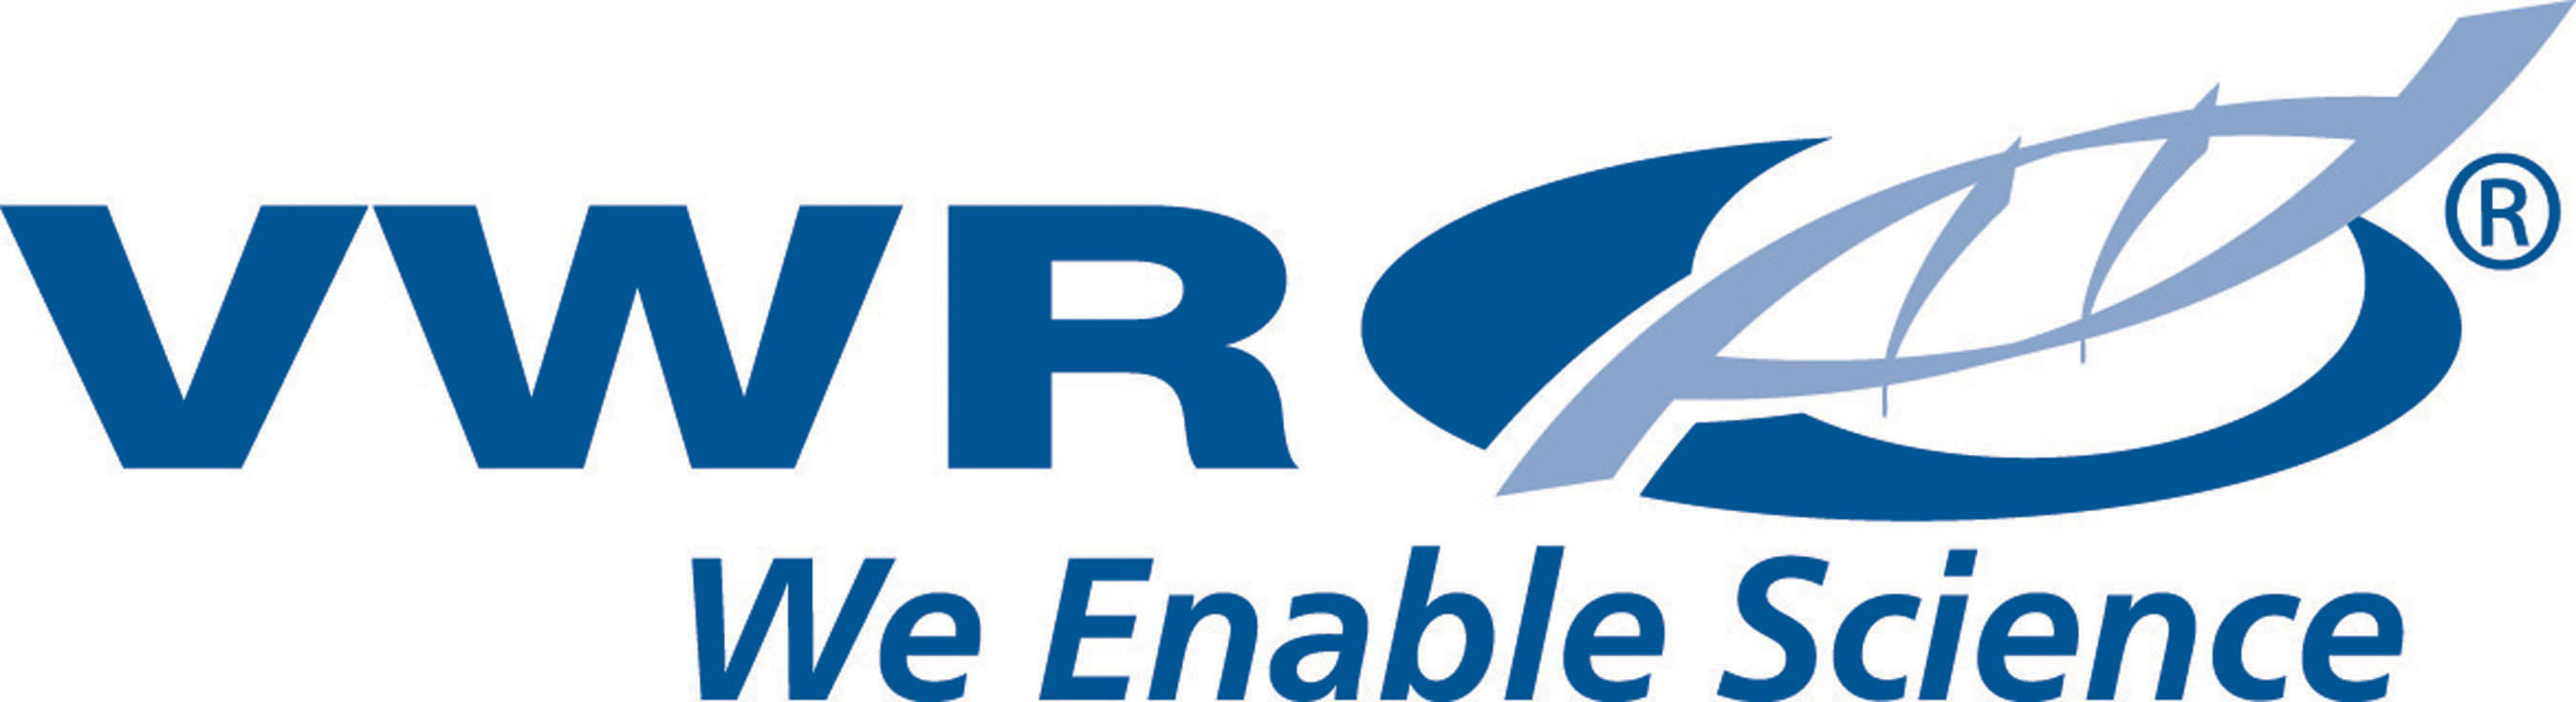 VWR Logo photo - 1